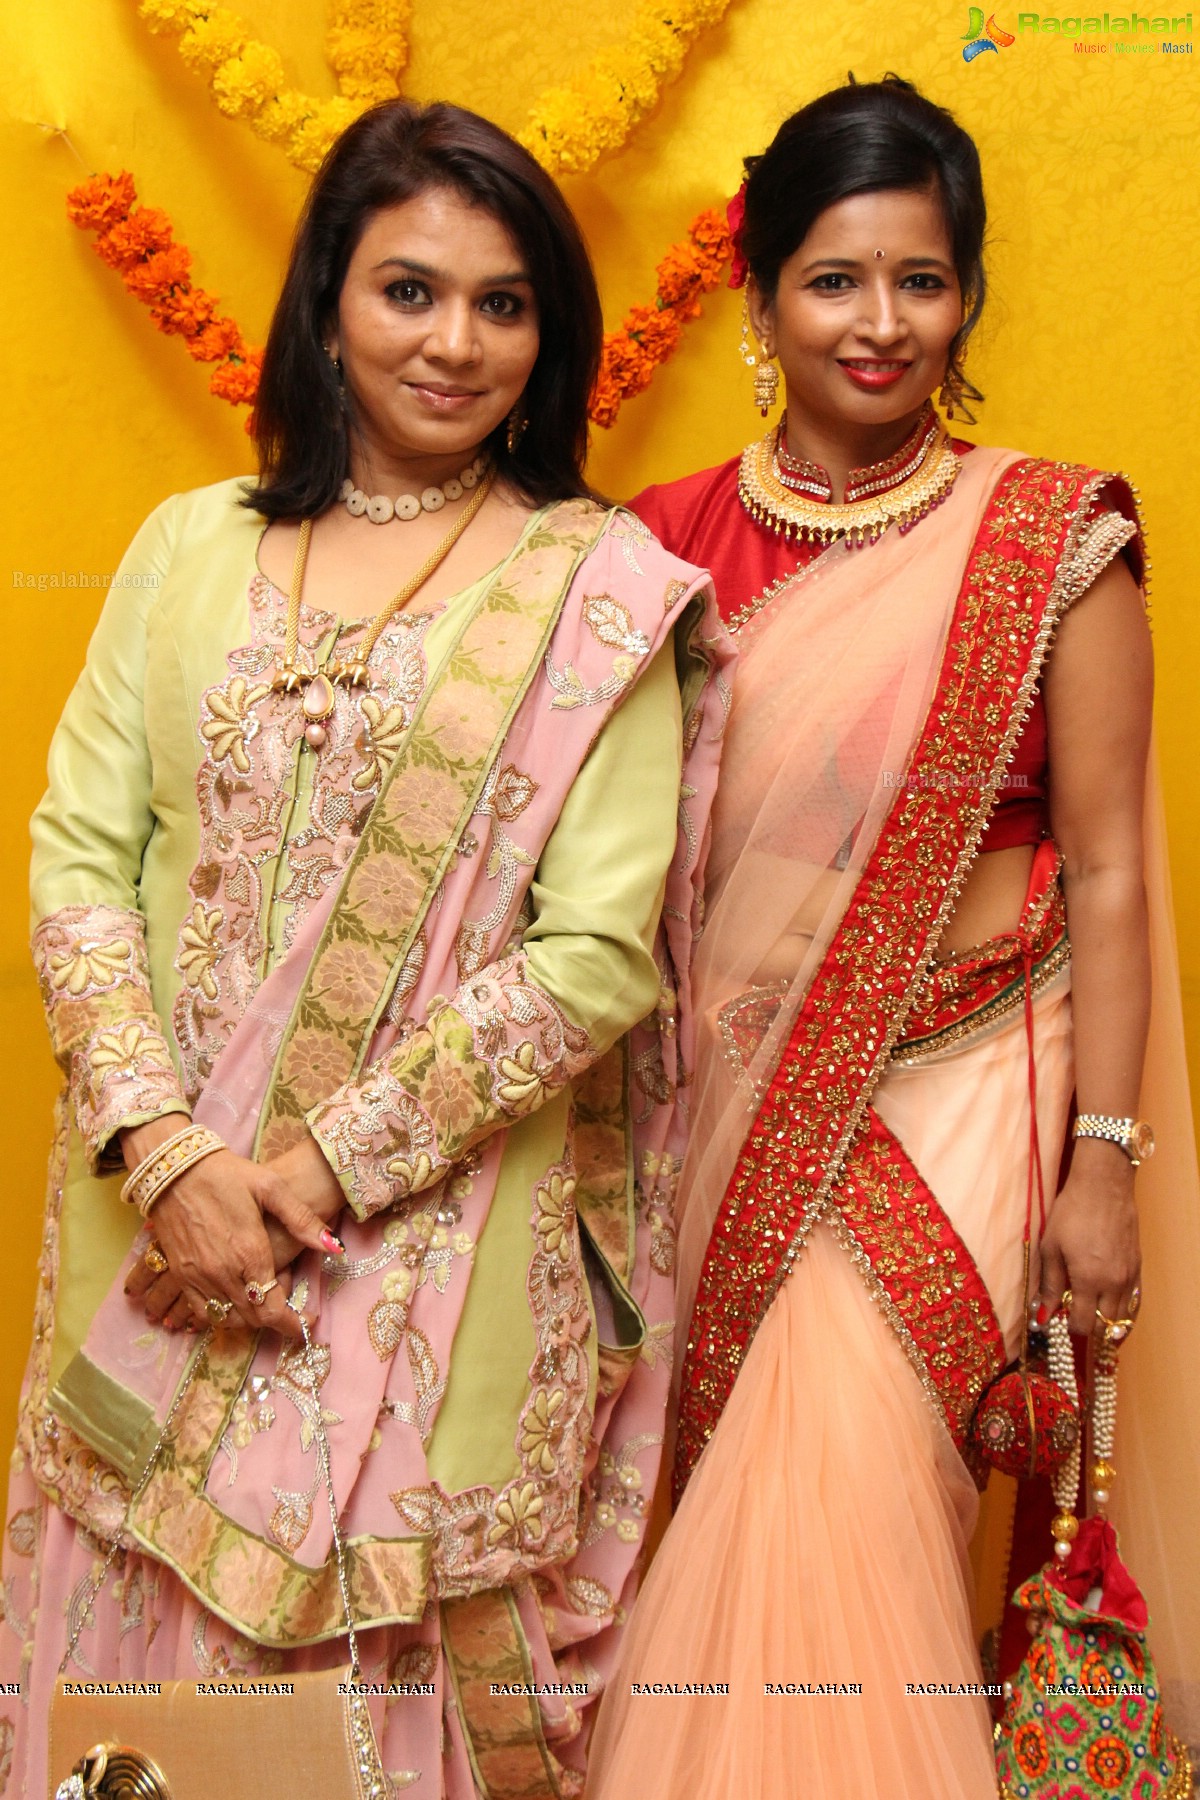 BWB Diwali Celebrations 2014 at Marigold, Hyderabad